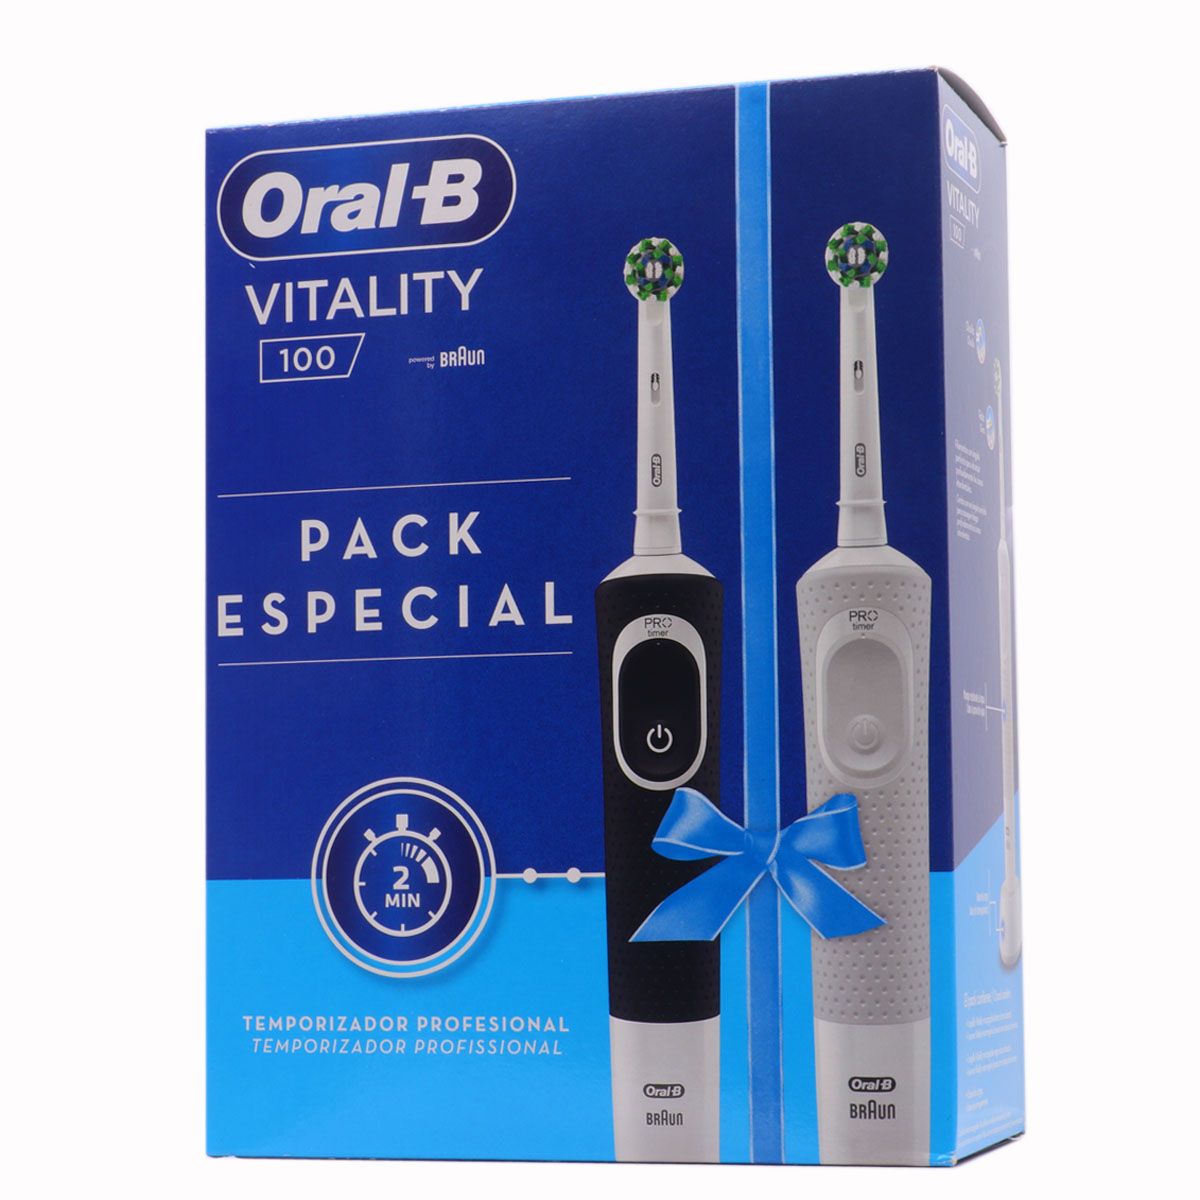 Oral B Cepillo Eléctrico Vitality 100 Pack Especial Duo